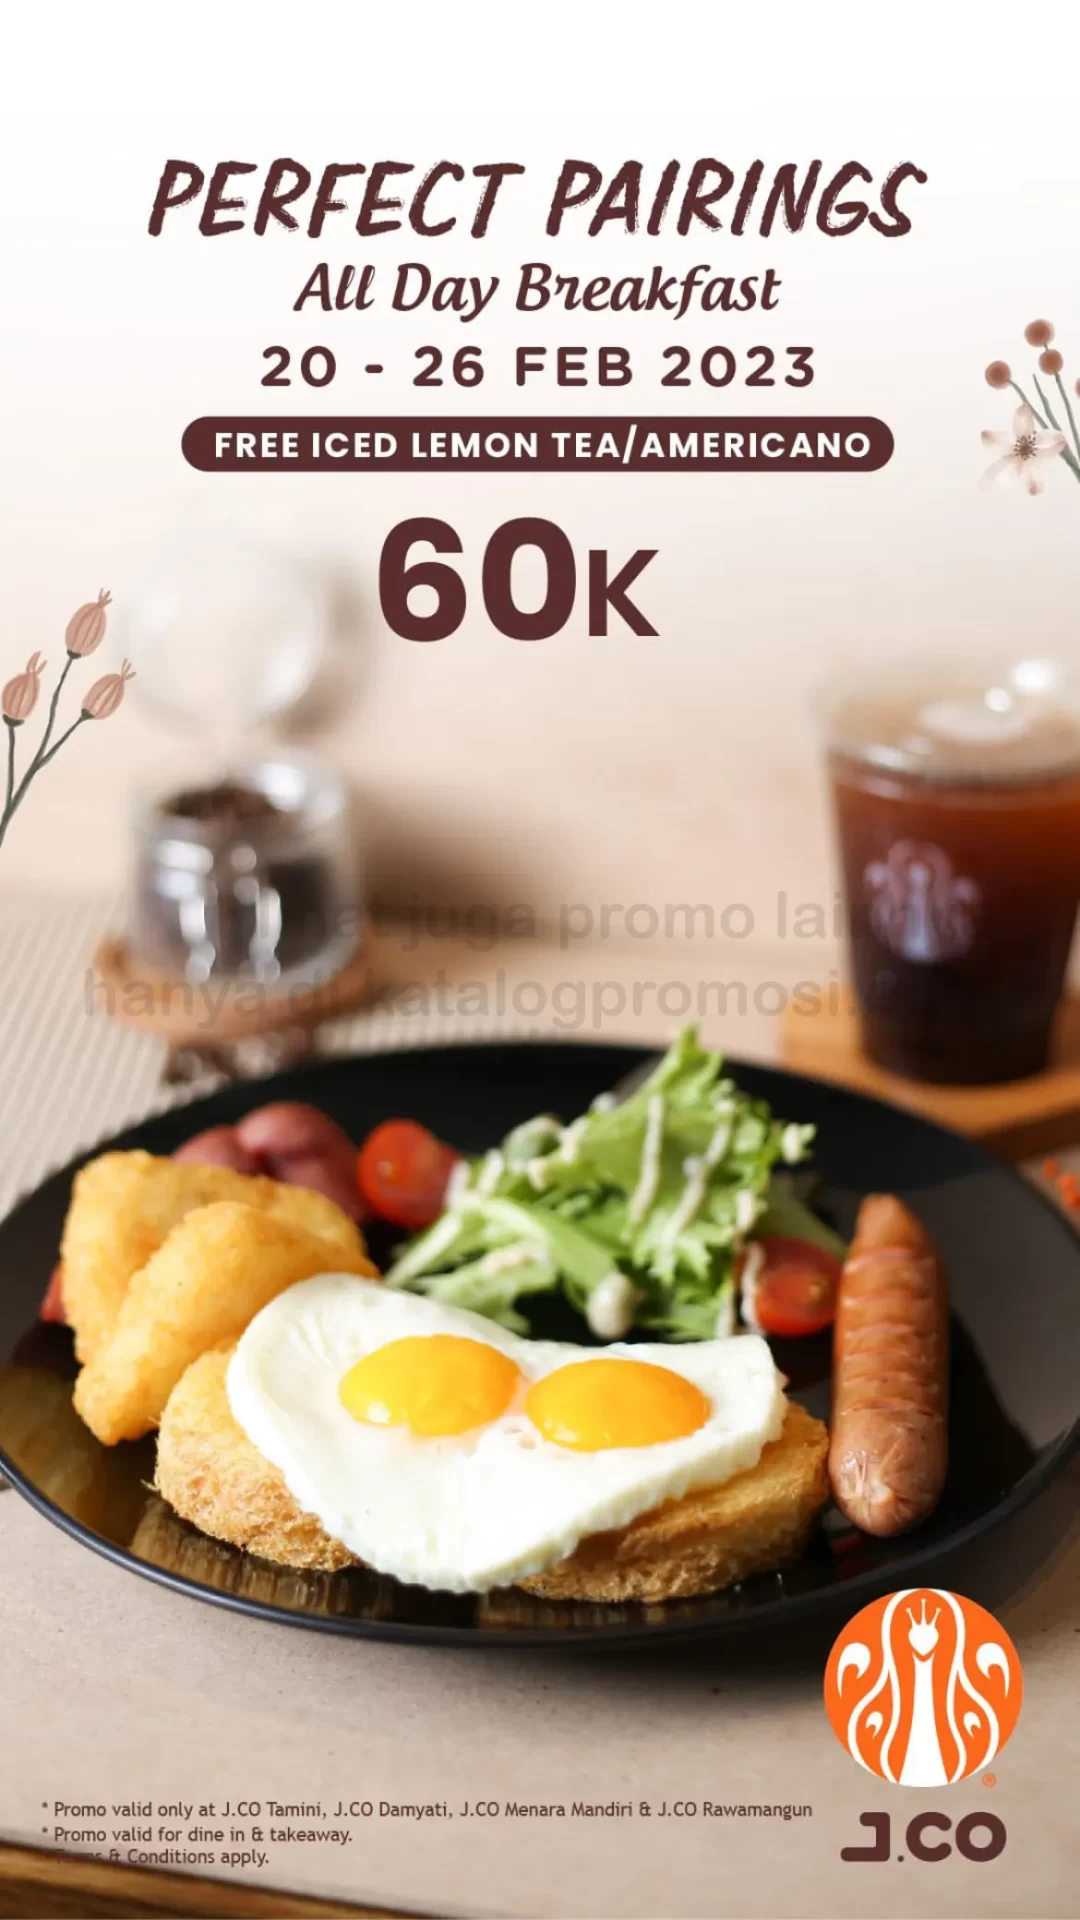 Promo JCO GRATIS Iced Lemon Tea / Americano setiap pembelian All Day Breakfast 